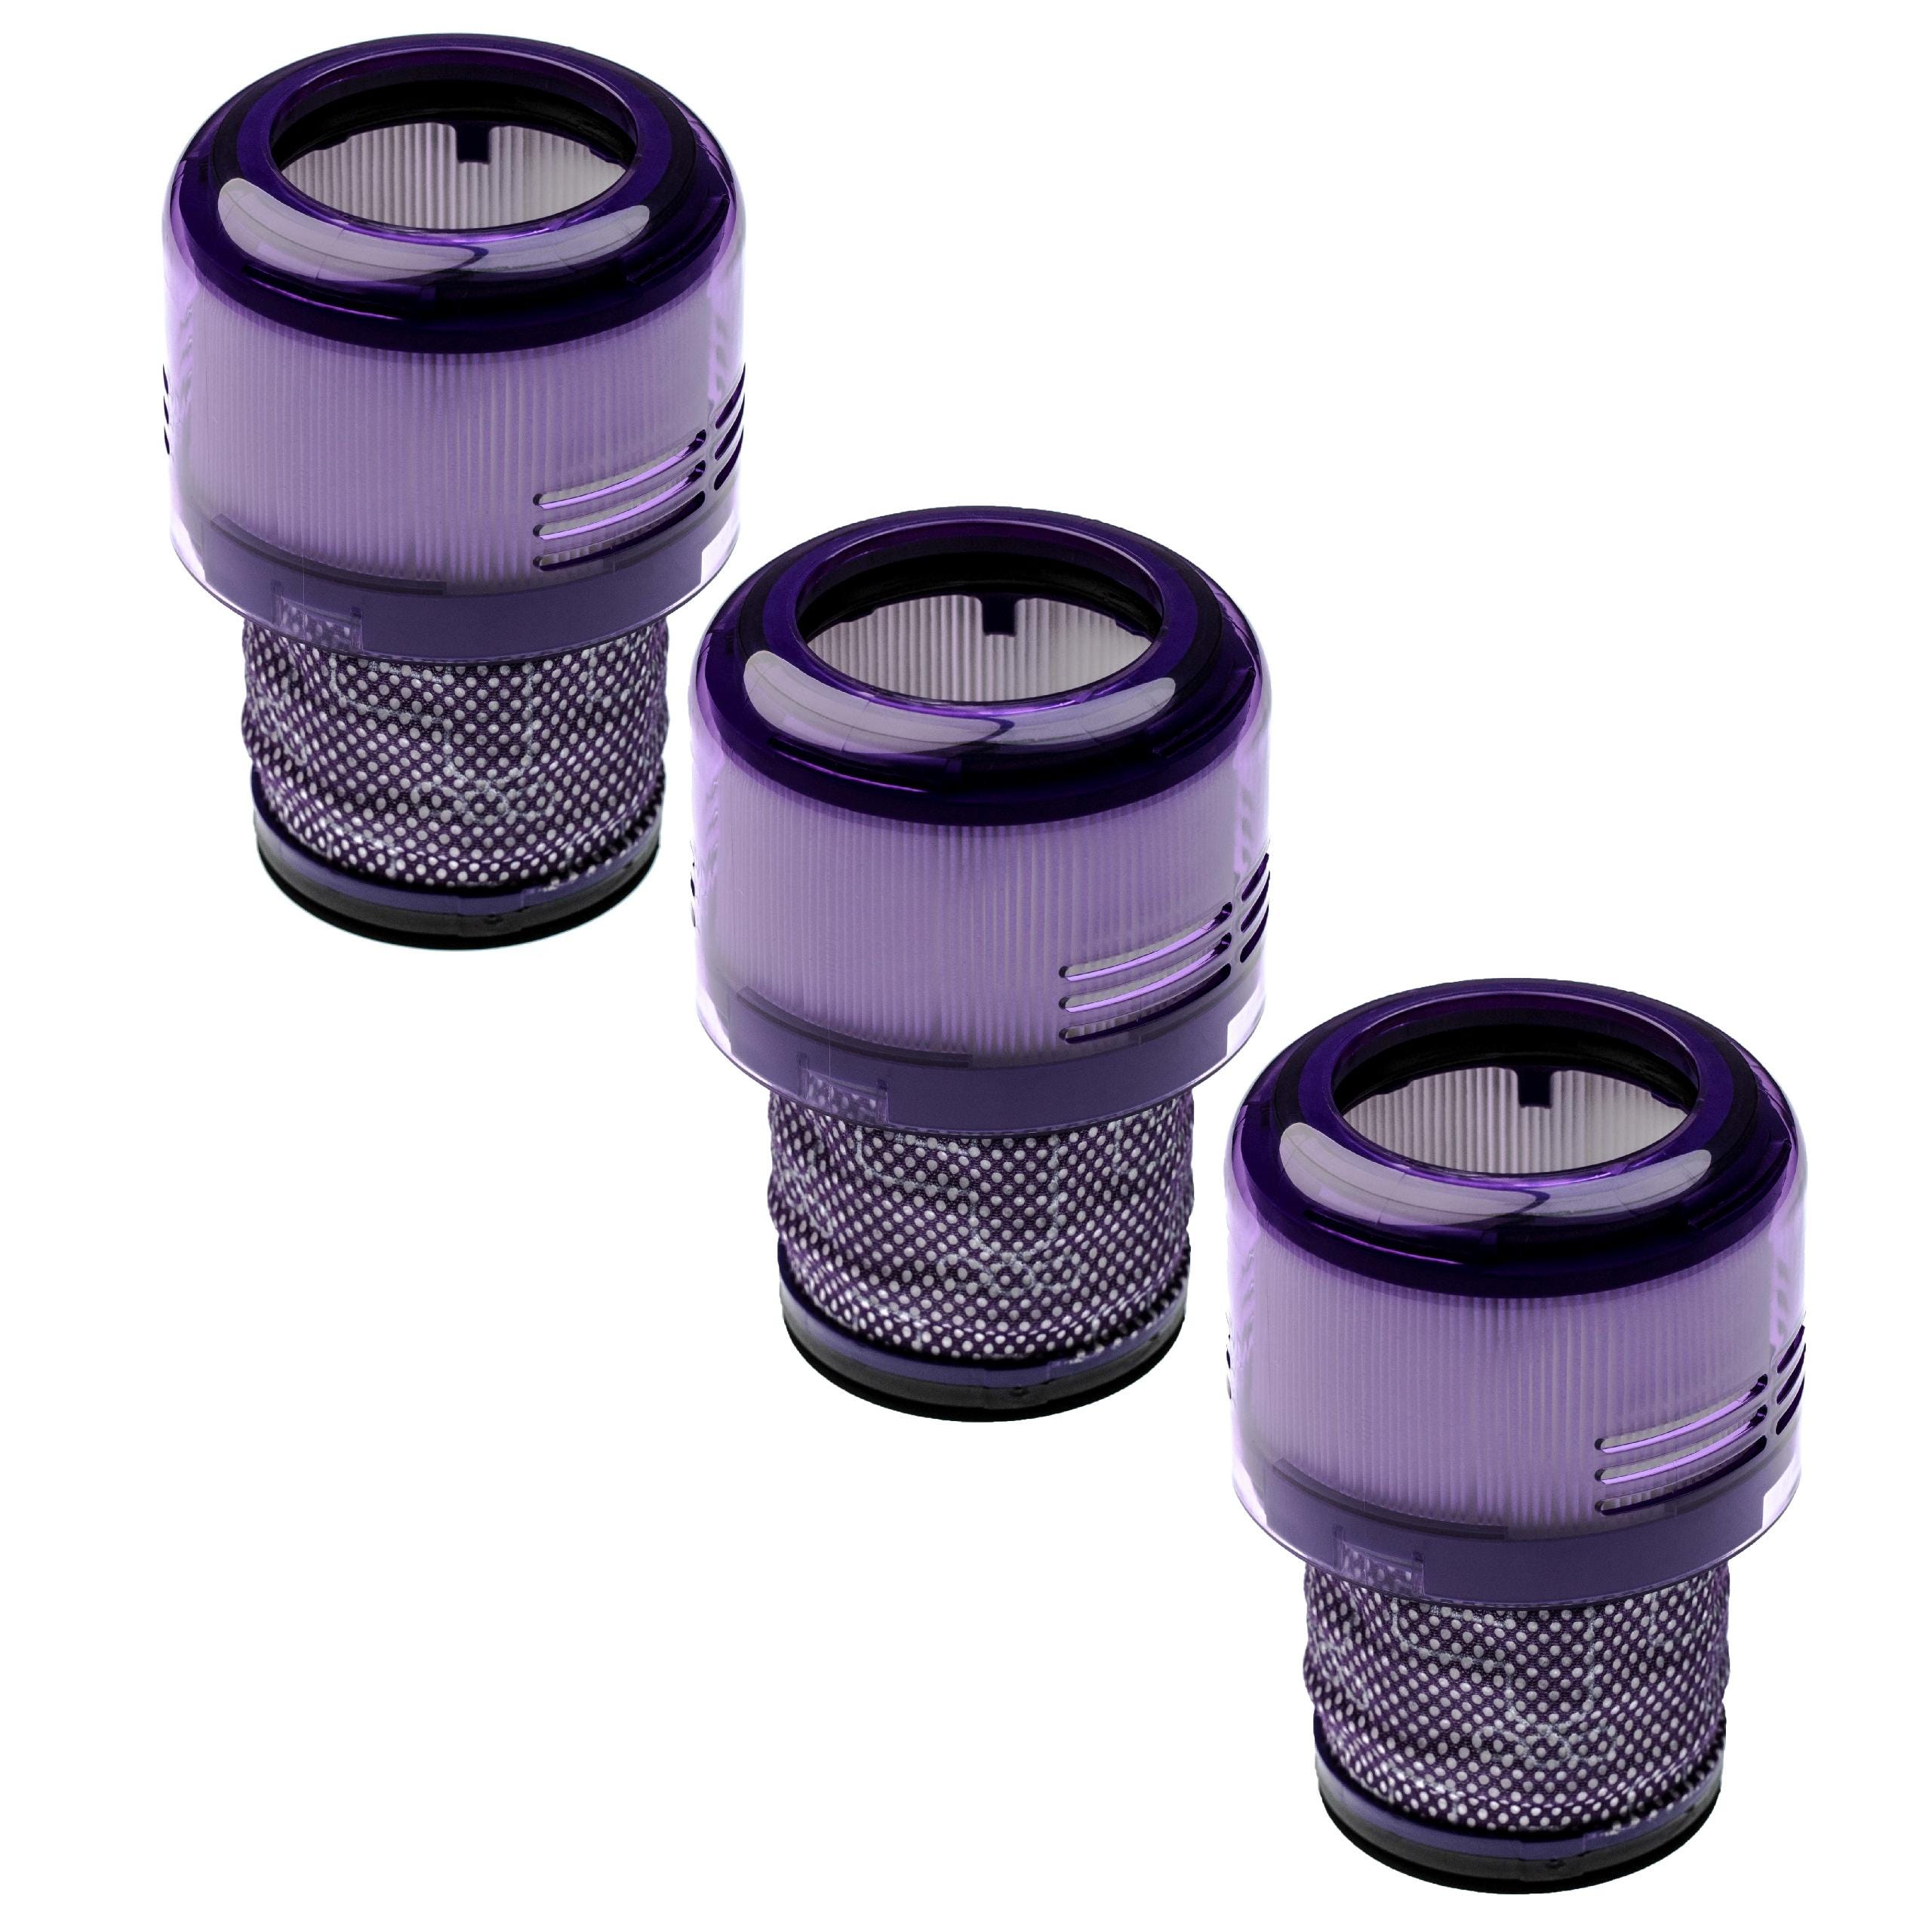 Vhbw 3x Filtres d'aspirateur compatible avec Dyson V11 Absolute, V11  Absolute Pro, V11 Animal Plus, V11 SV14 aspirateur sans-fil - Filtre  anti-saleté